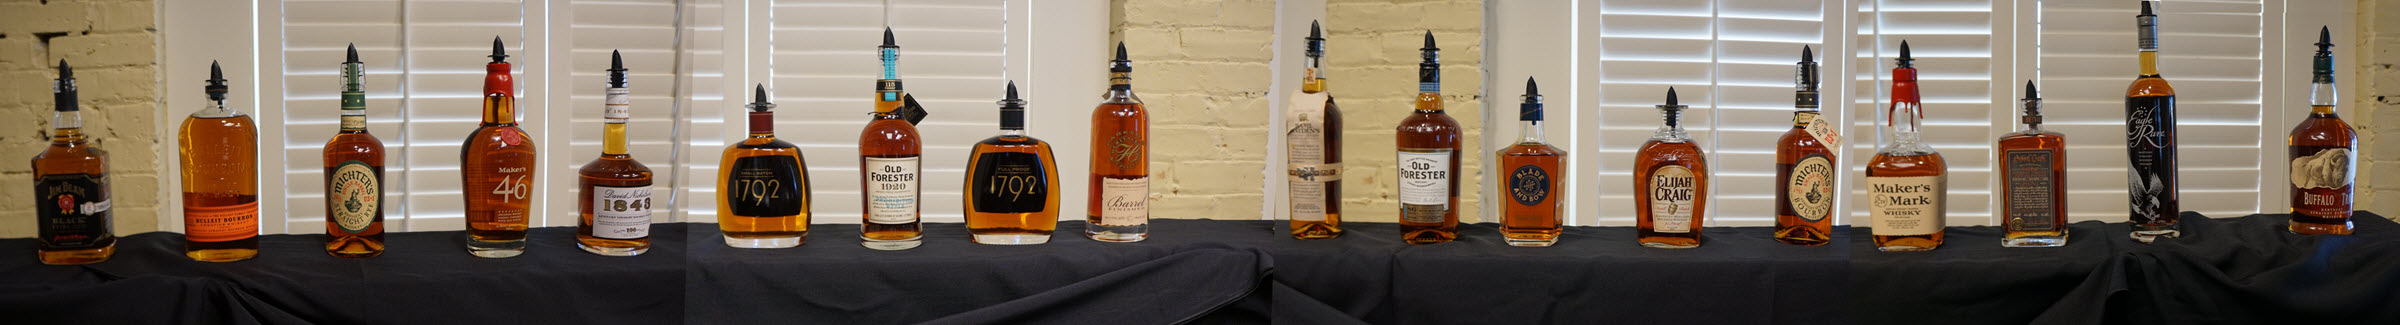 Kentucky Bourbon Hall of Fame - Bottles of Bourbon